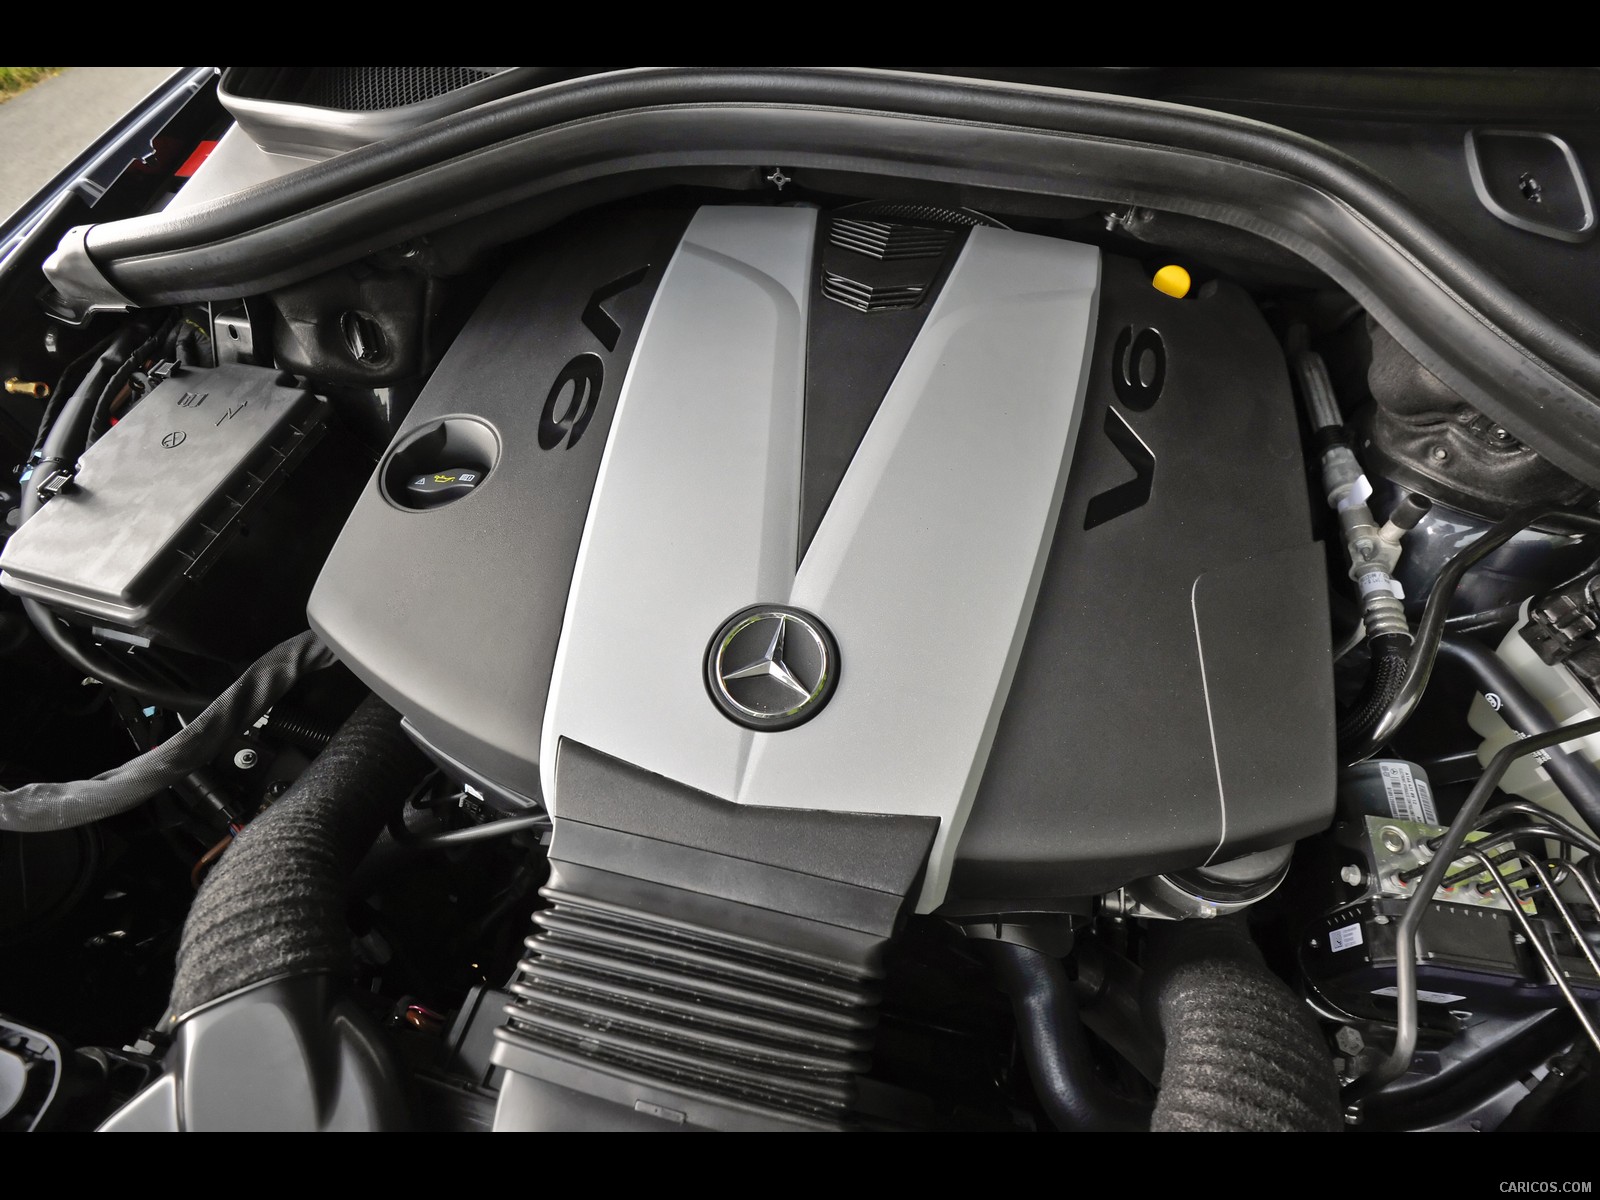 Mercedes-Benz M-Class (2012) ML350 BlueTEC 4MATIC - Engine, #116 of 320